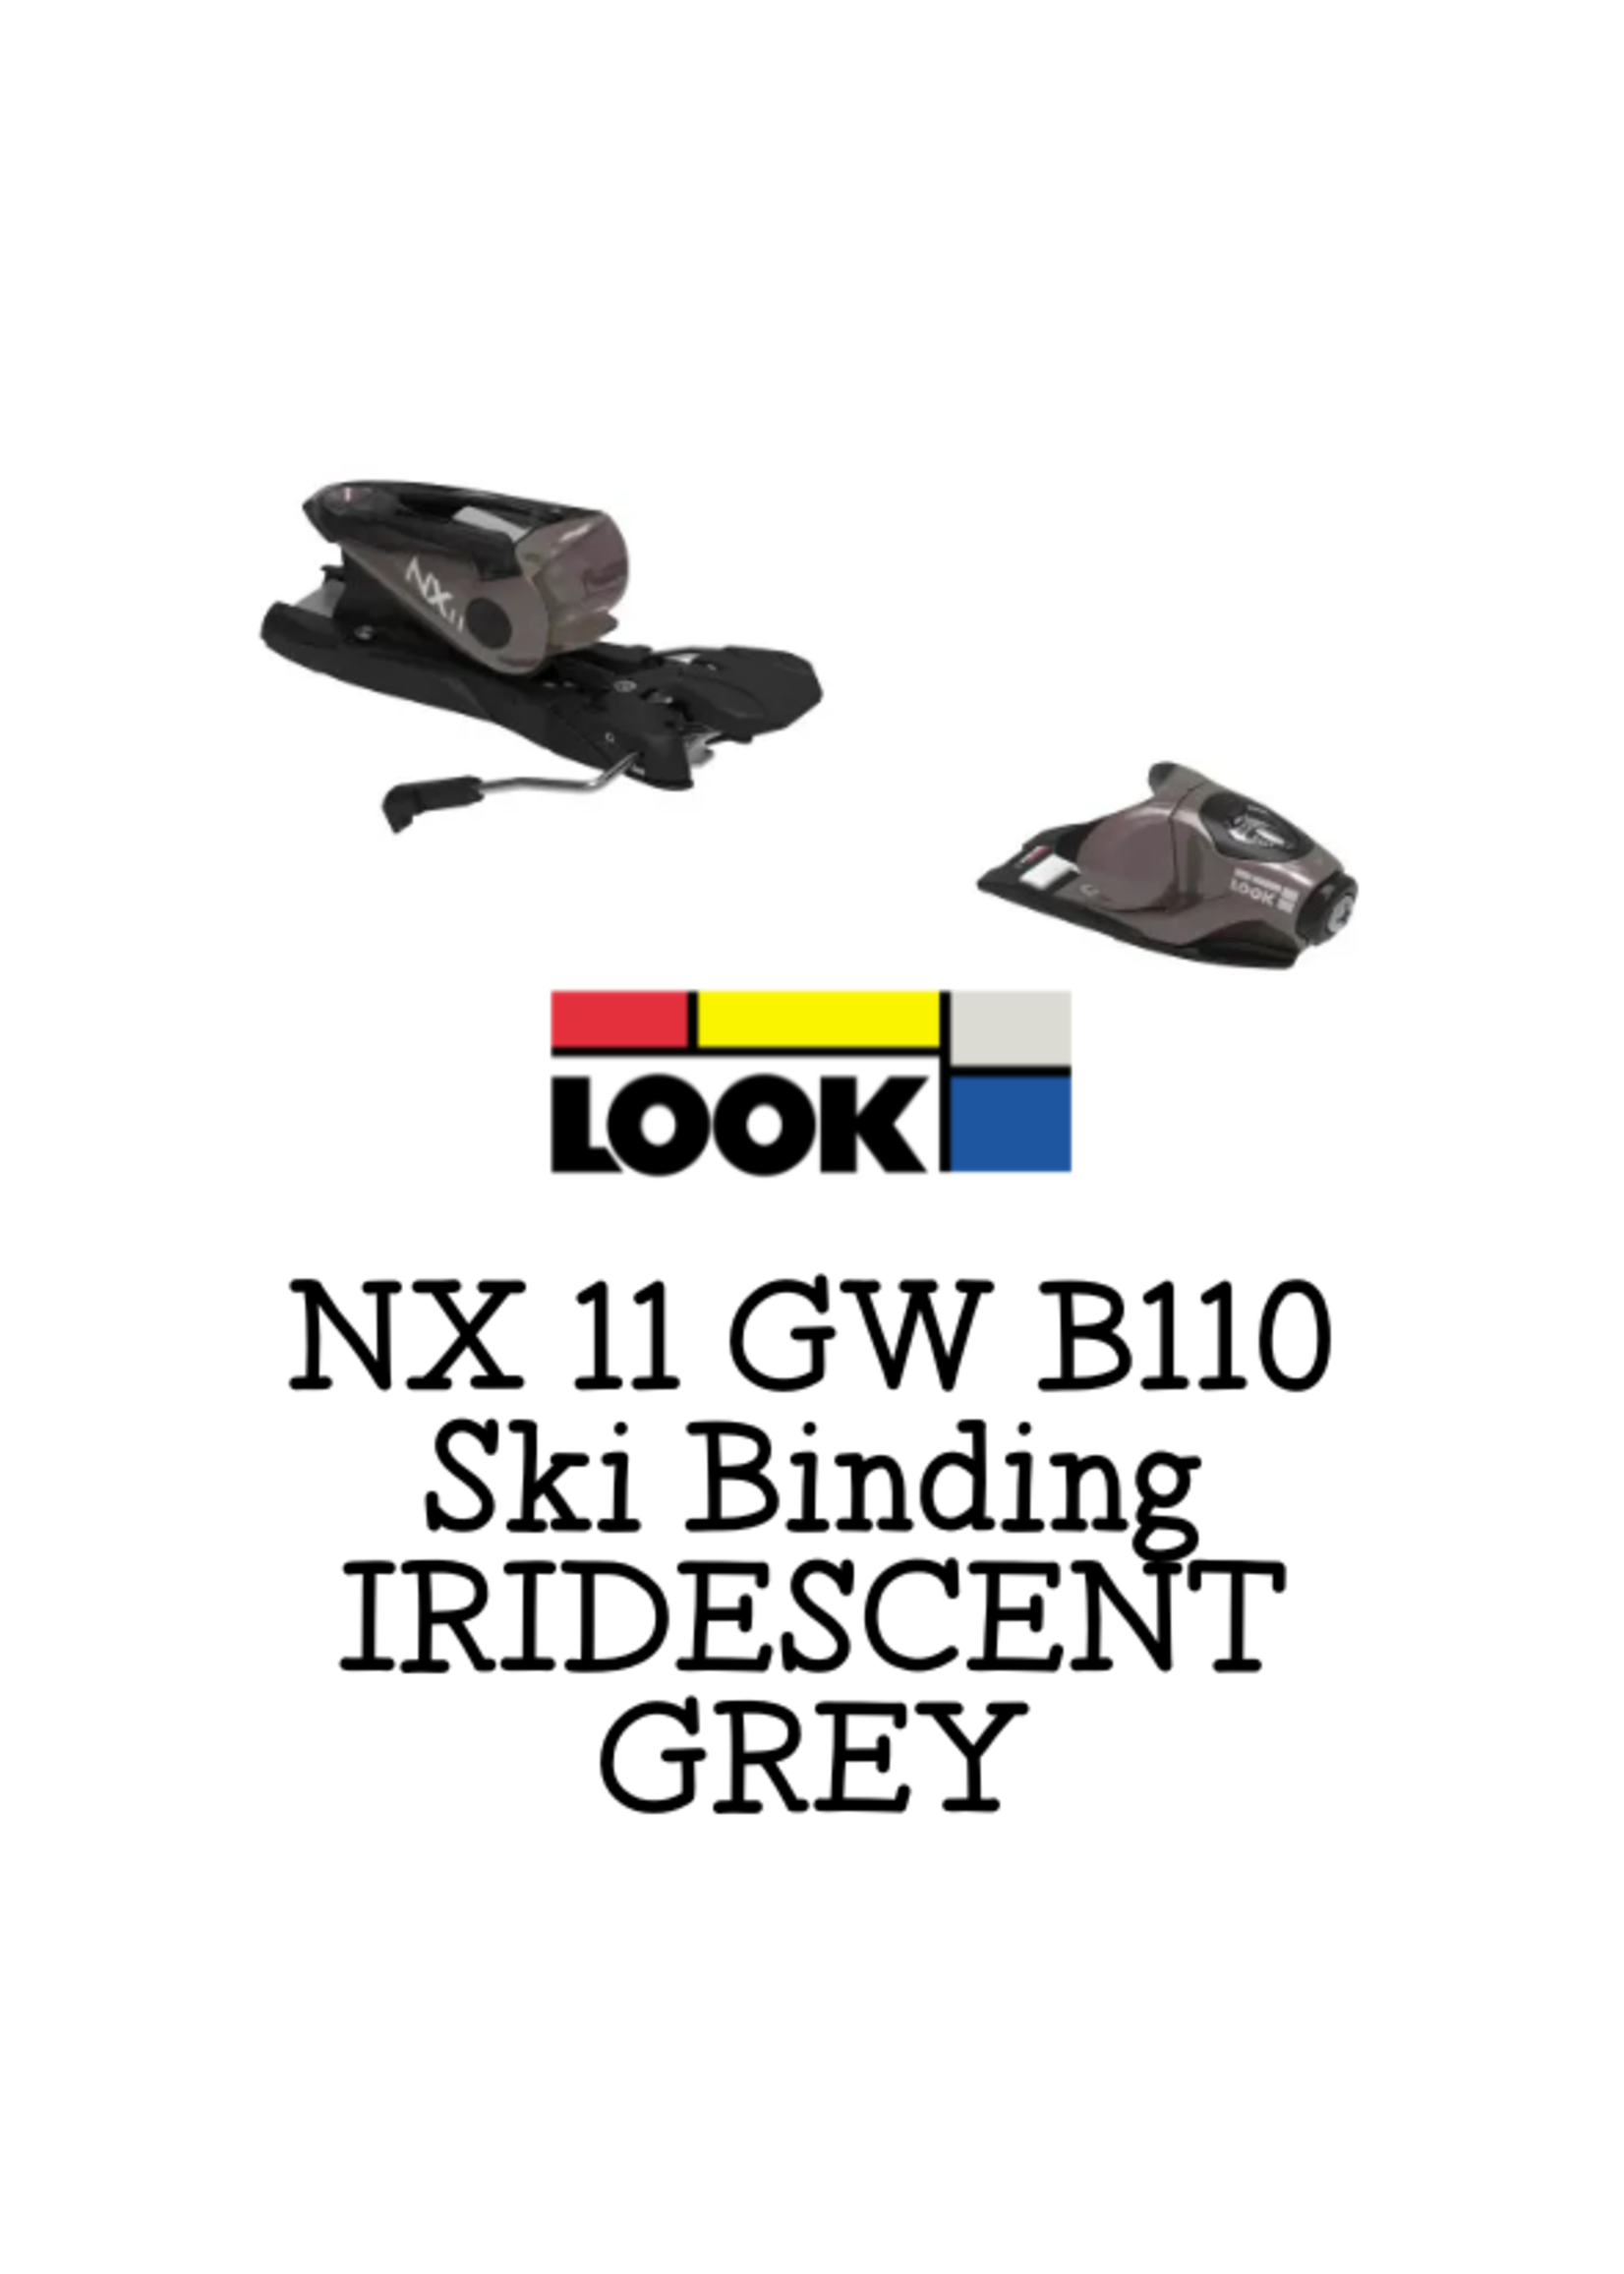 Look Look  NX 11 GW B110 IRIDESCENT GREY